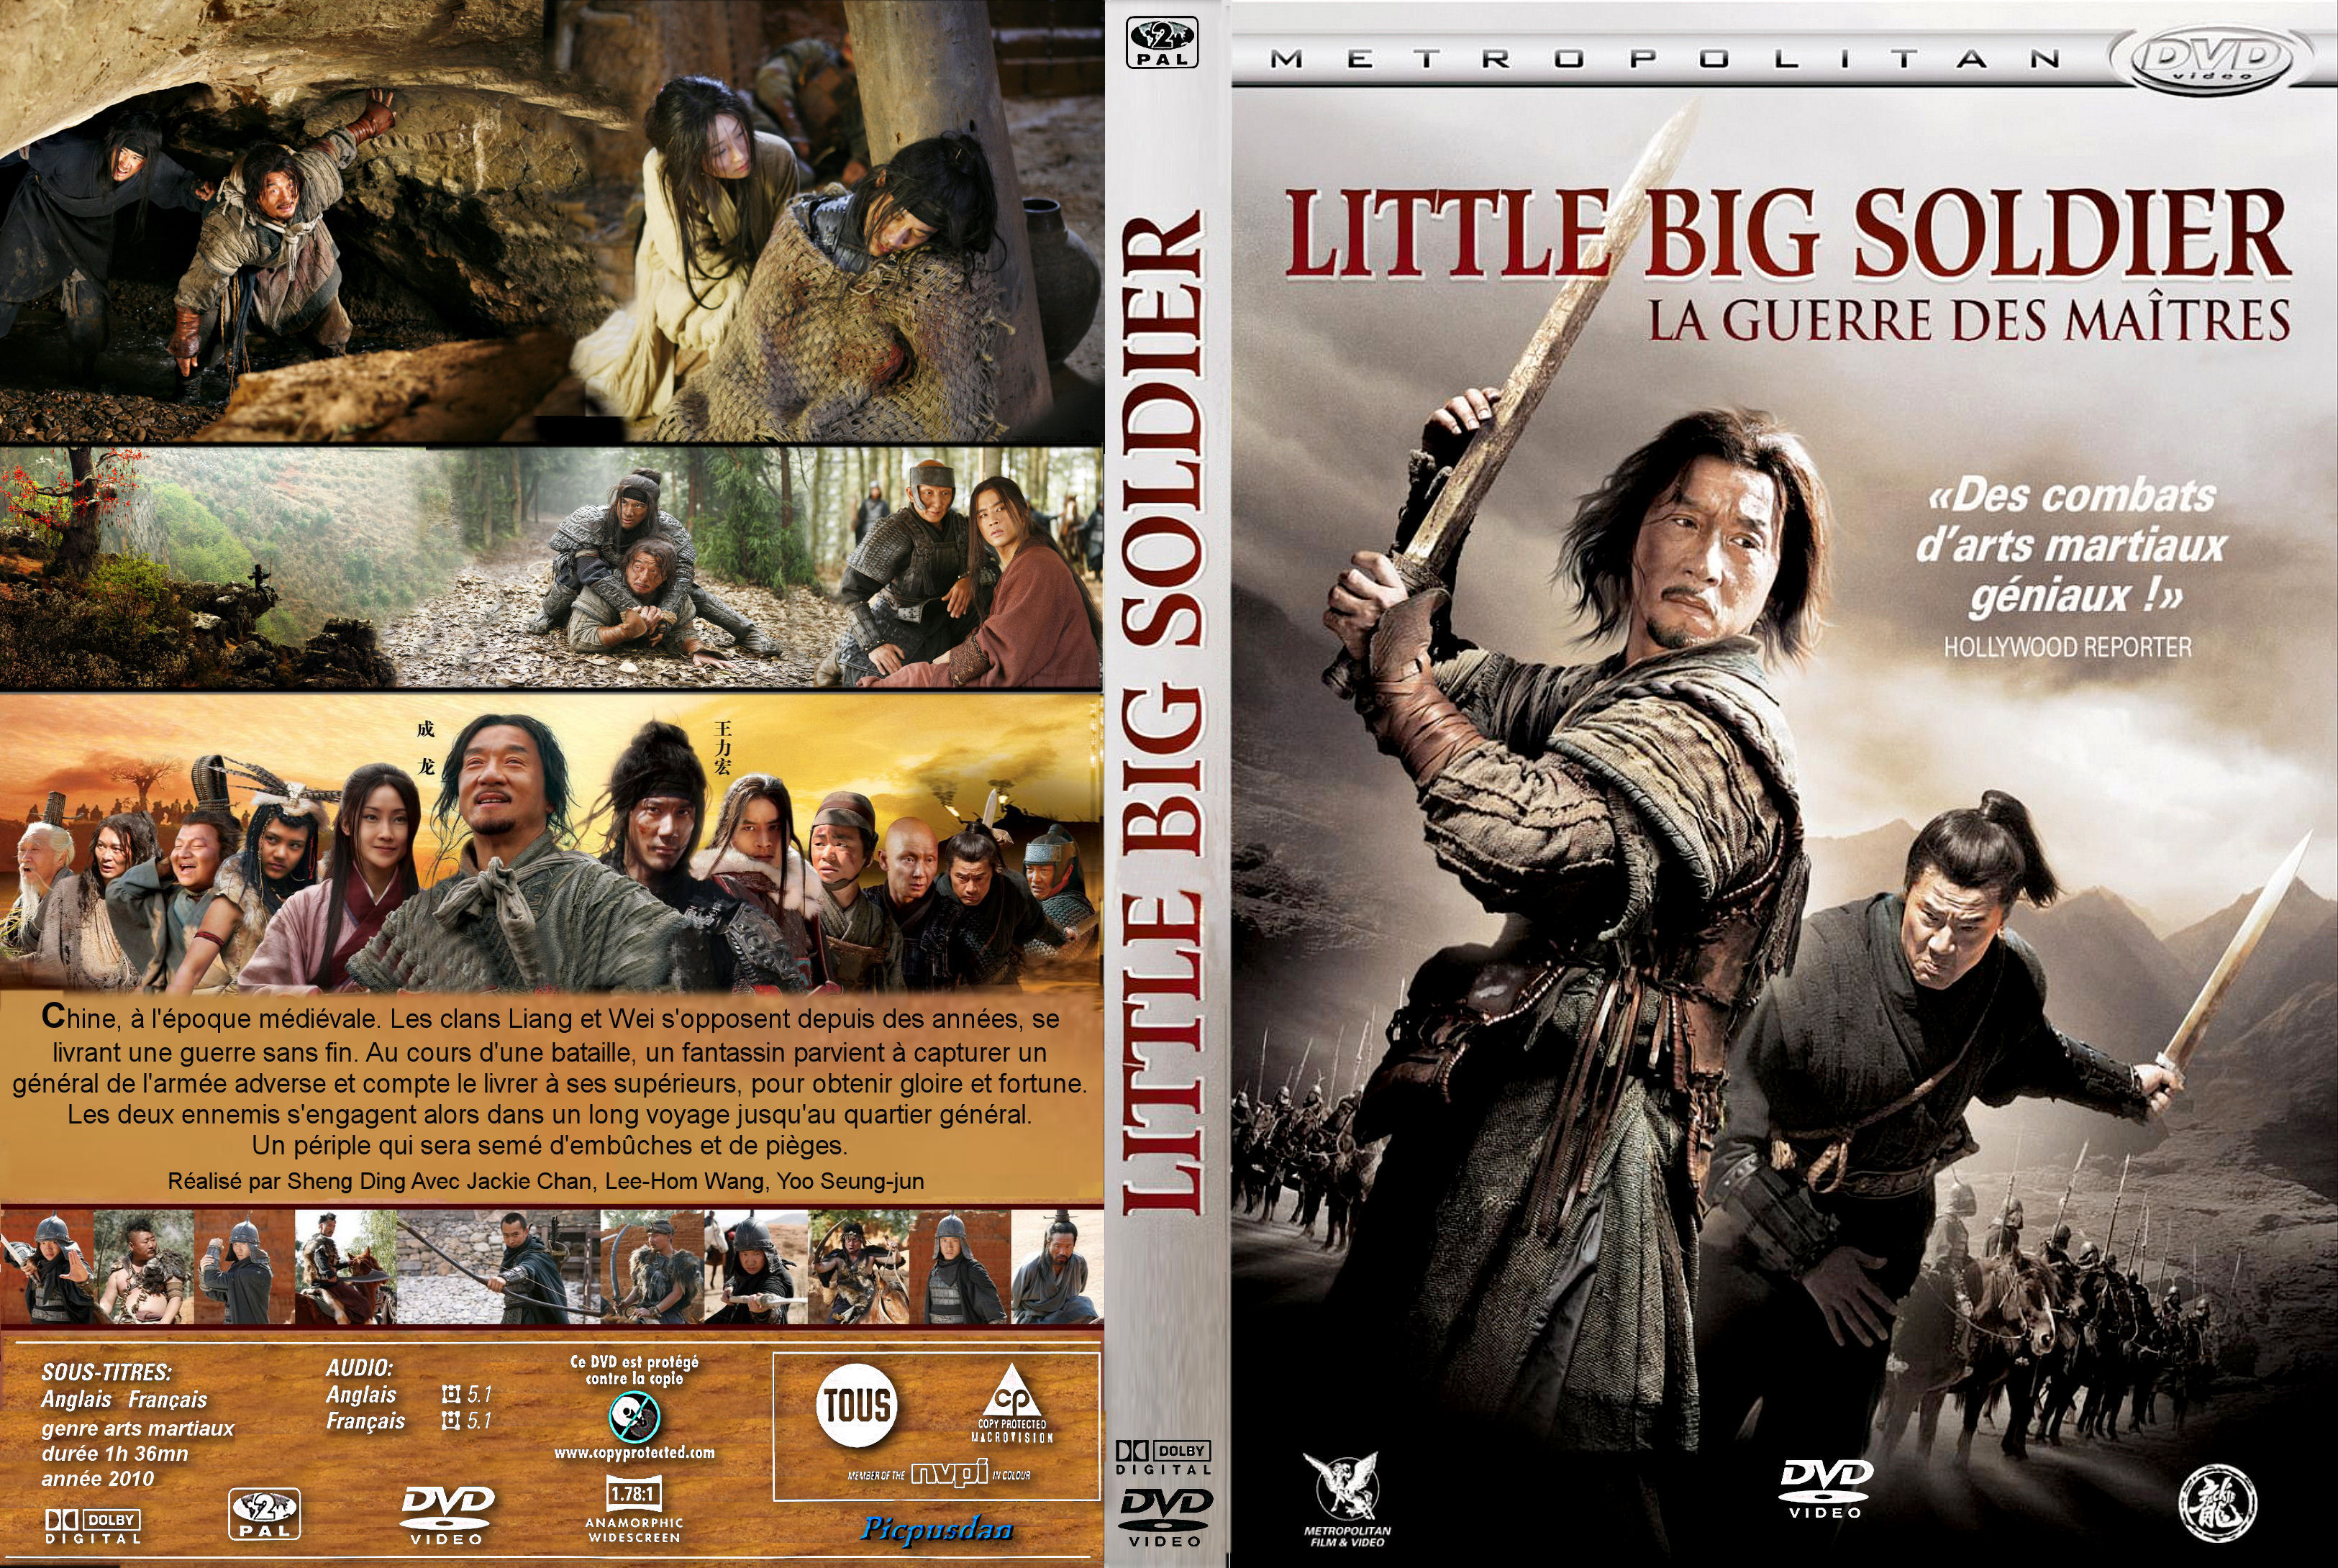 Jaquette DVD Little big soldier custom